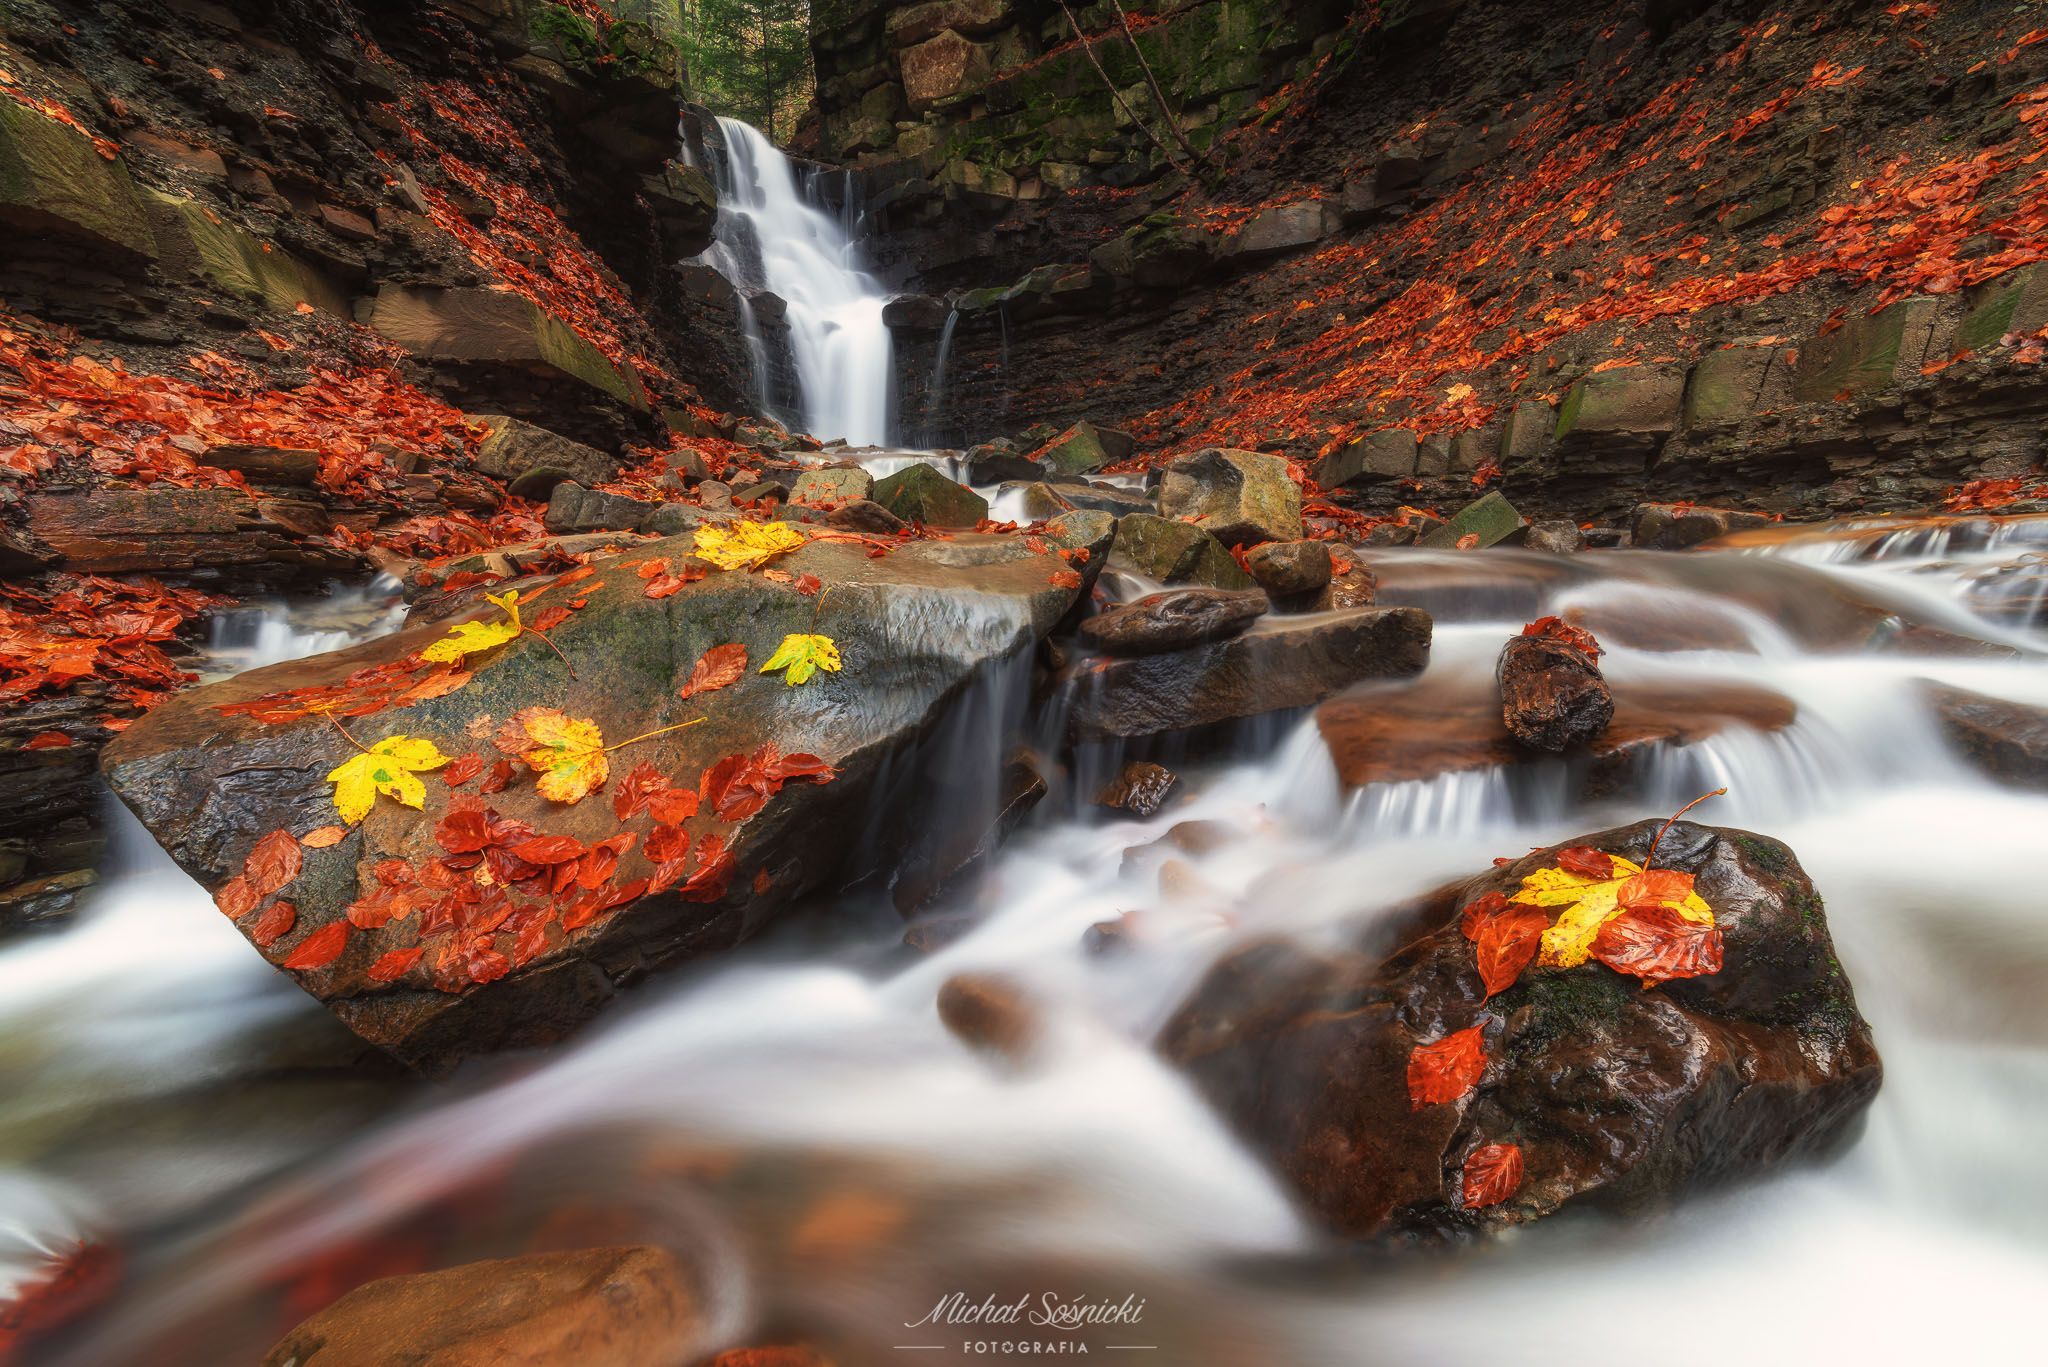 #poland #autumn#nature #landscape #awesome #amazing #pentax #benro #benq #waterfall, Michał Sośnicki